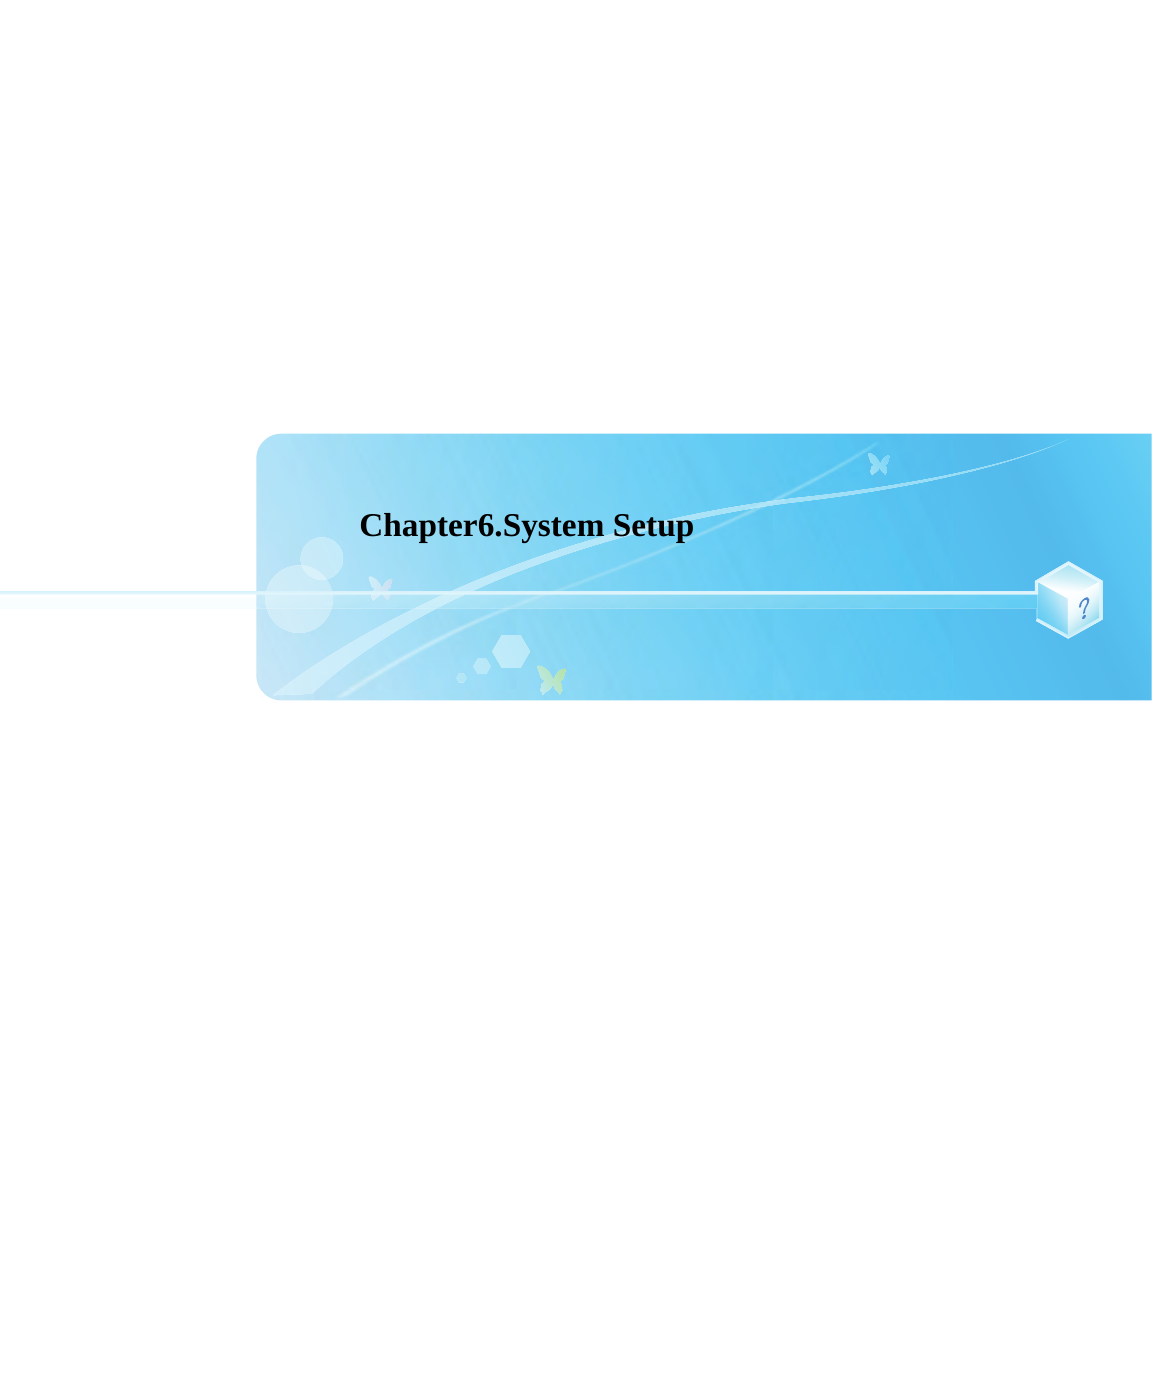 Chapter6.System Setup